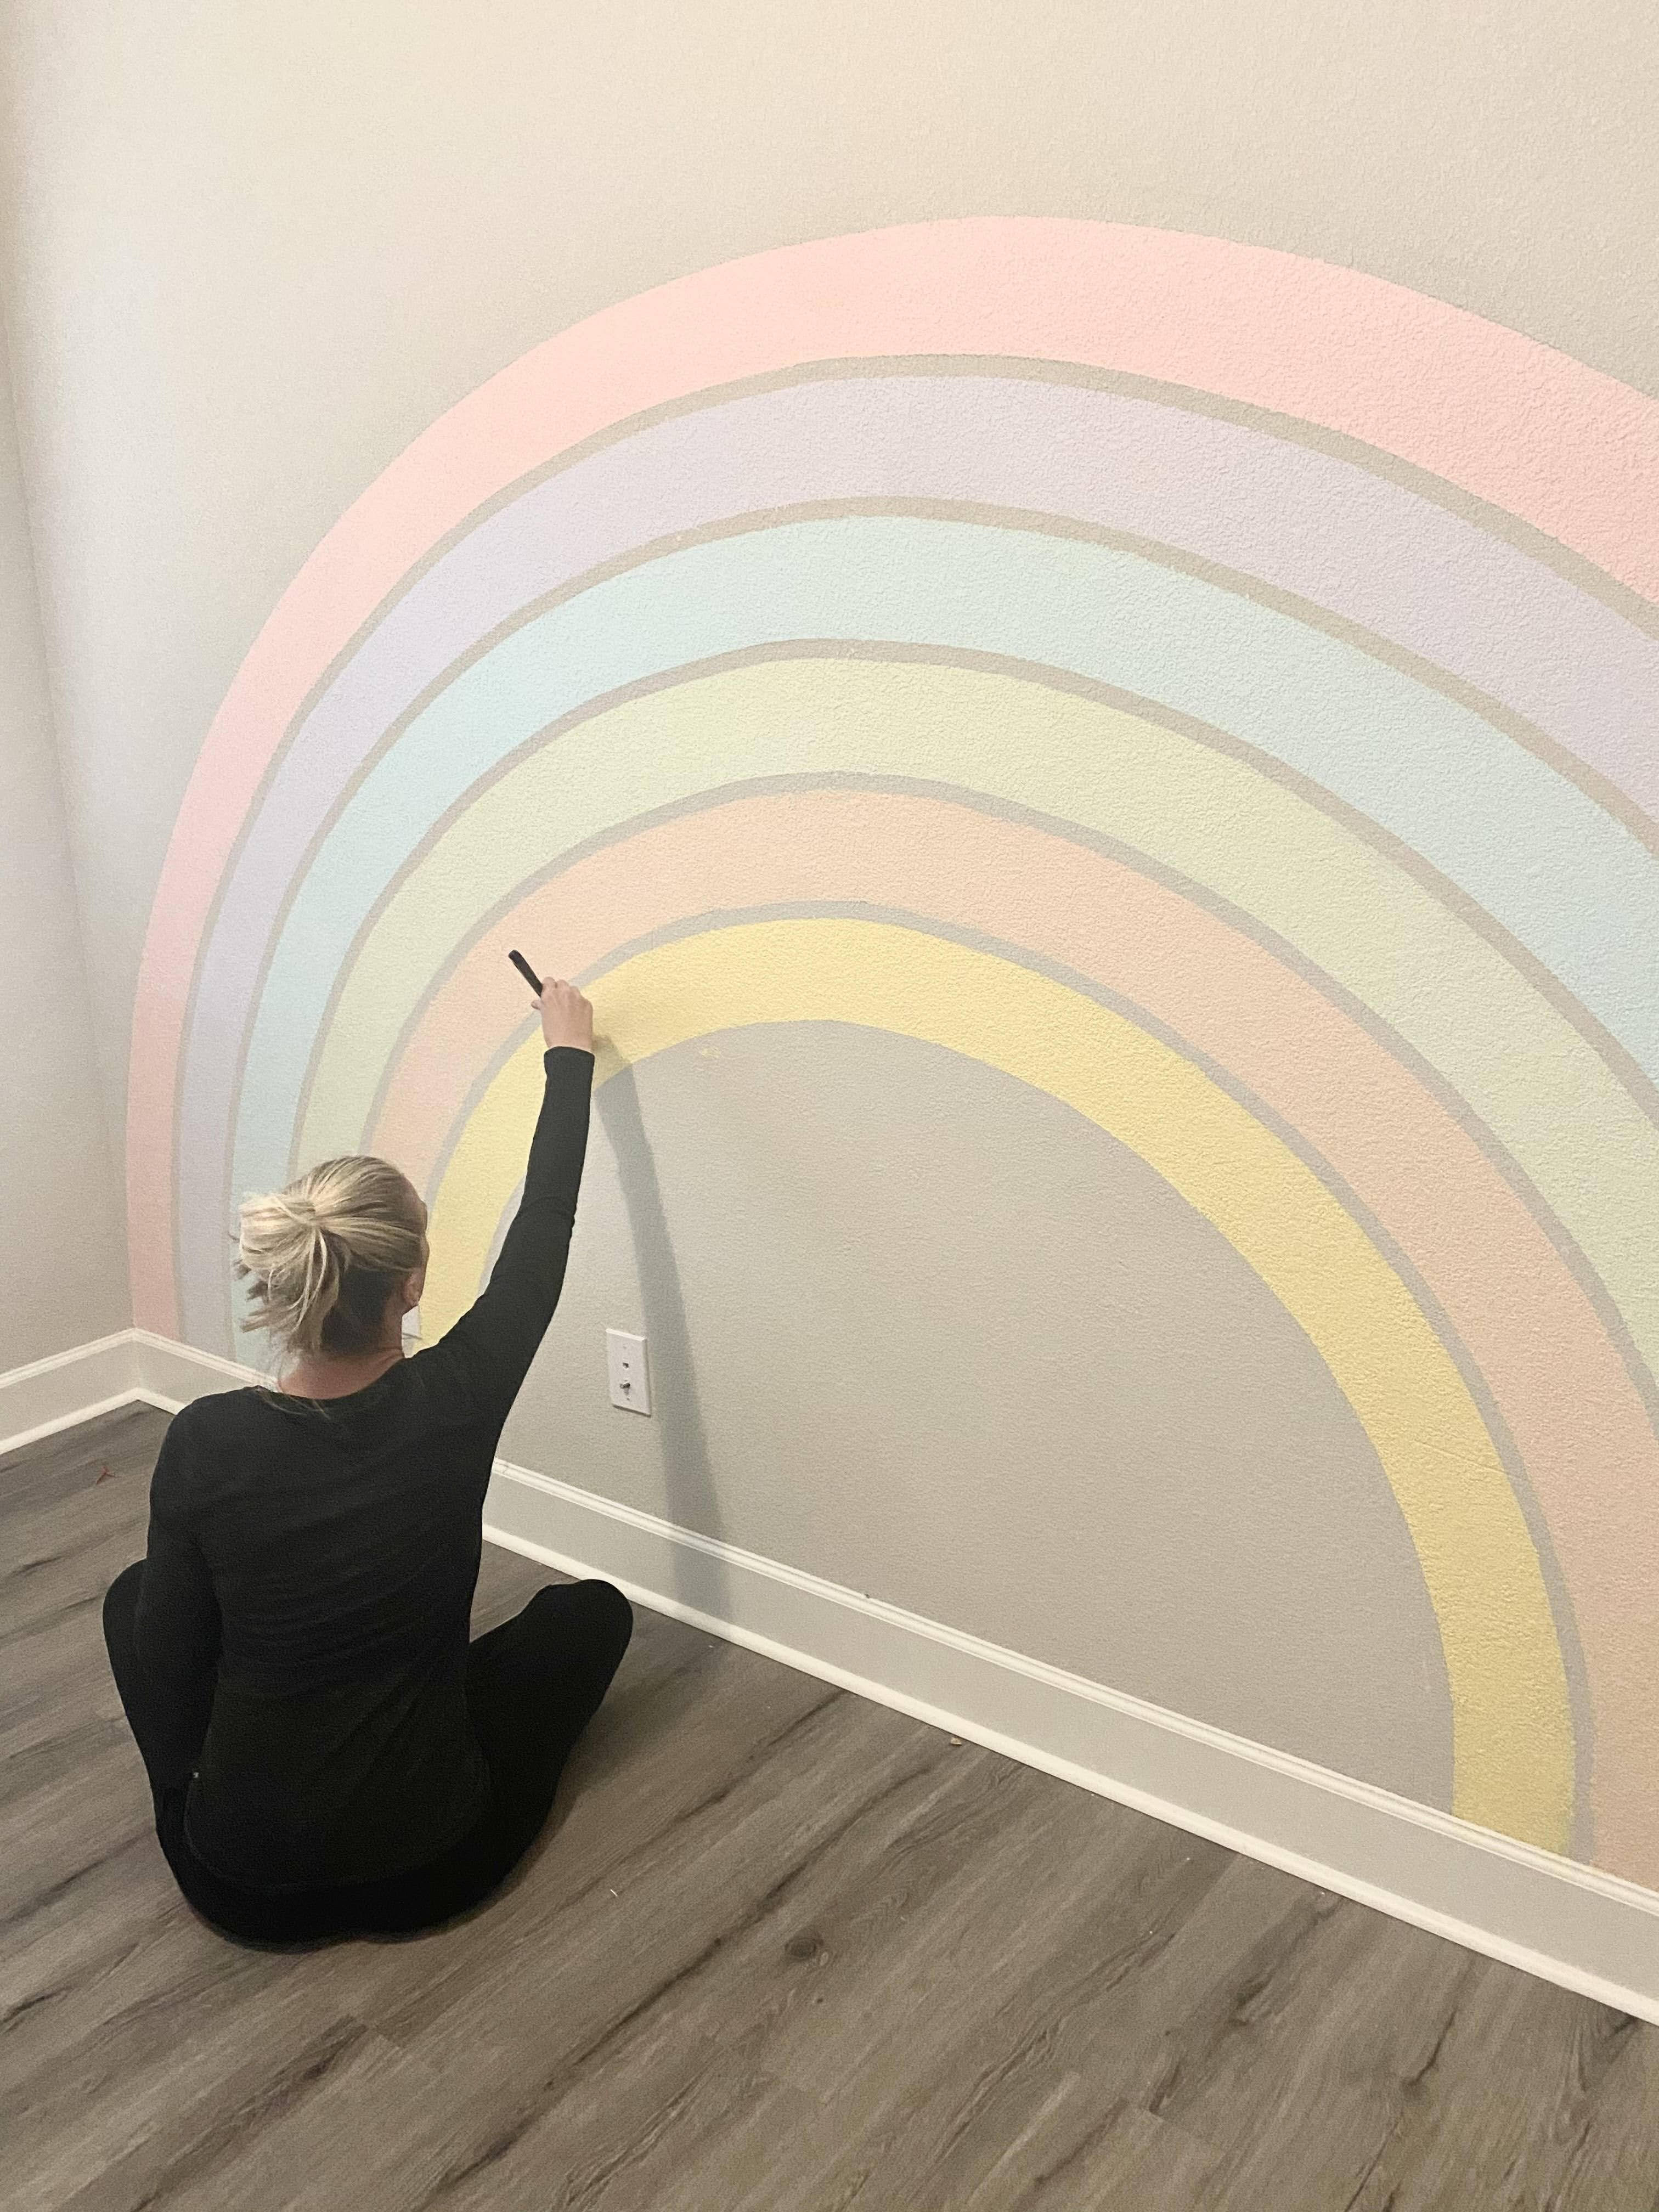 DIY Rainbow mural for a playroom wall or girls room!